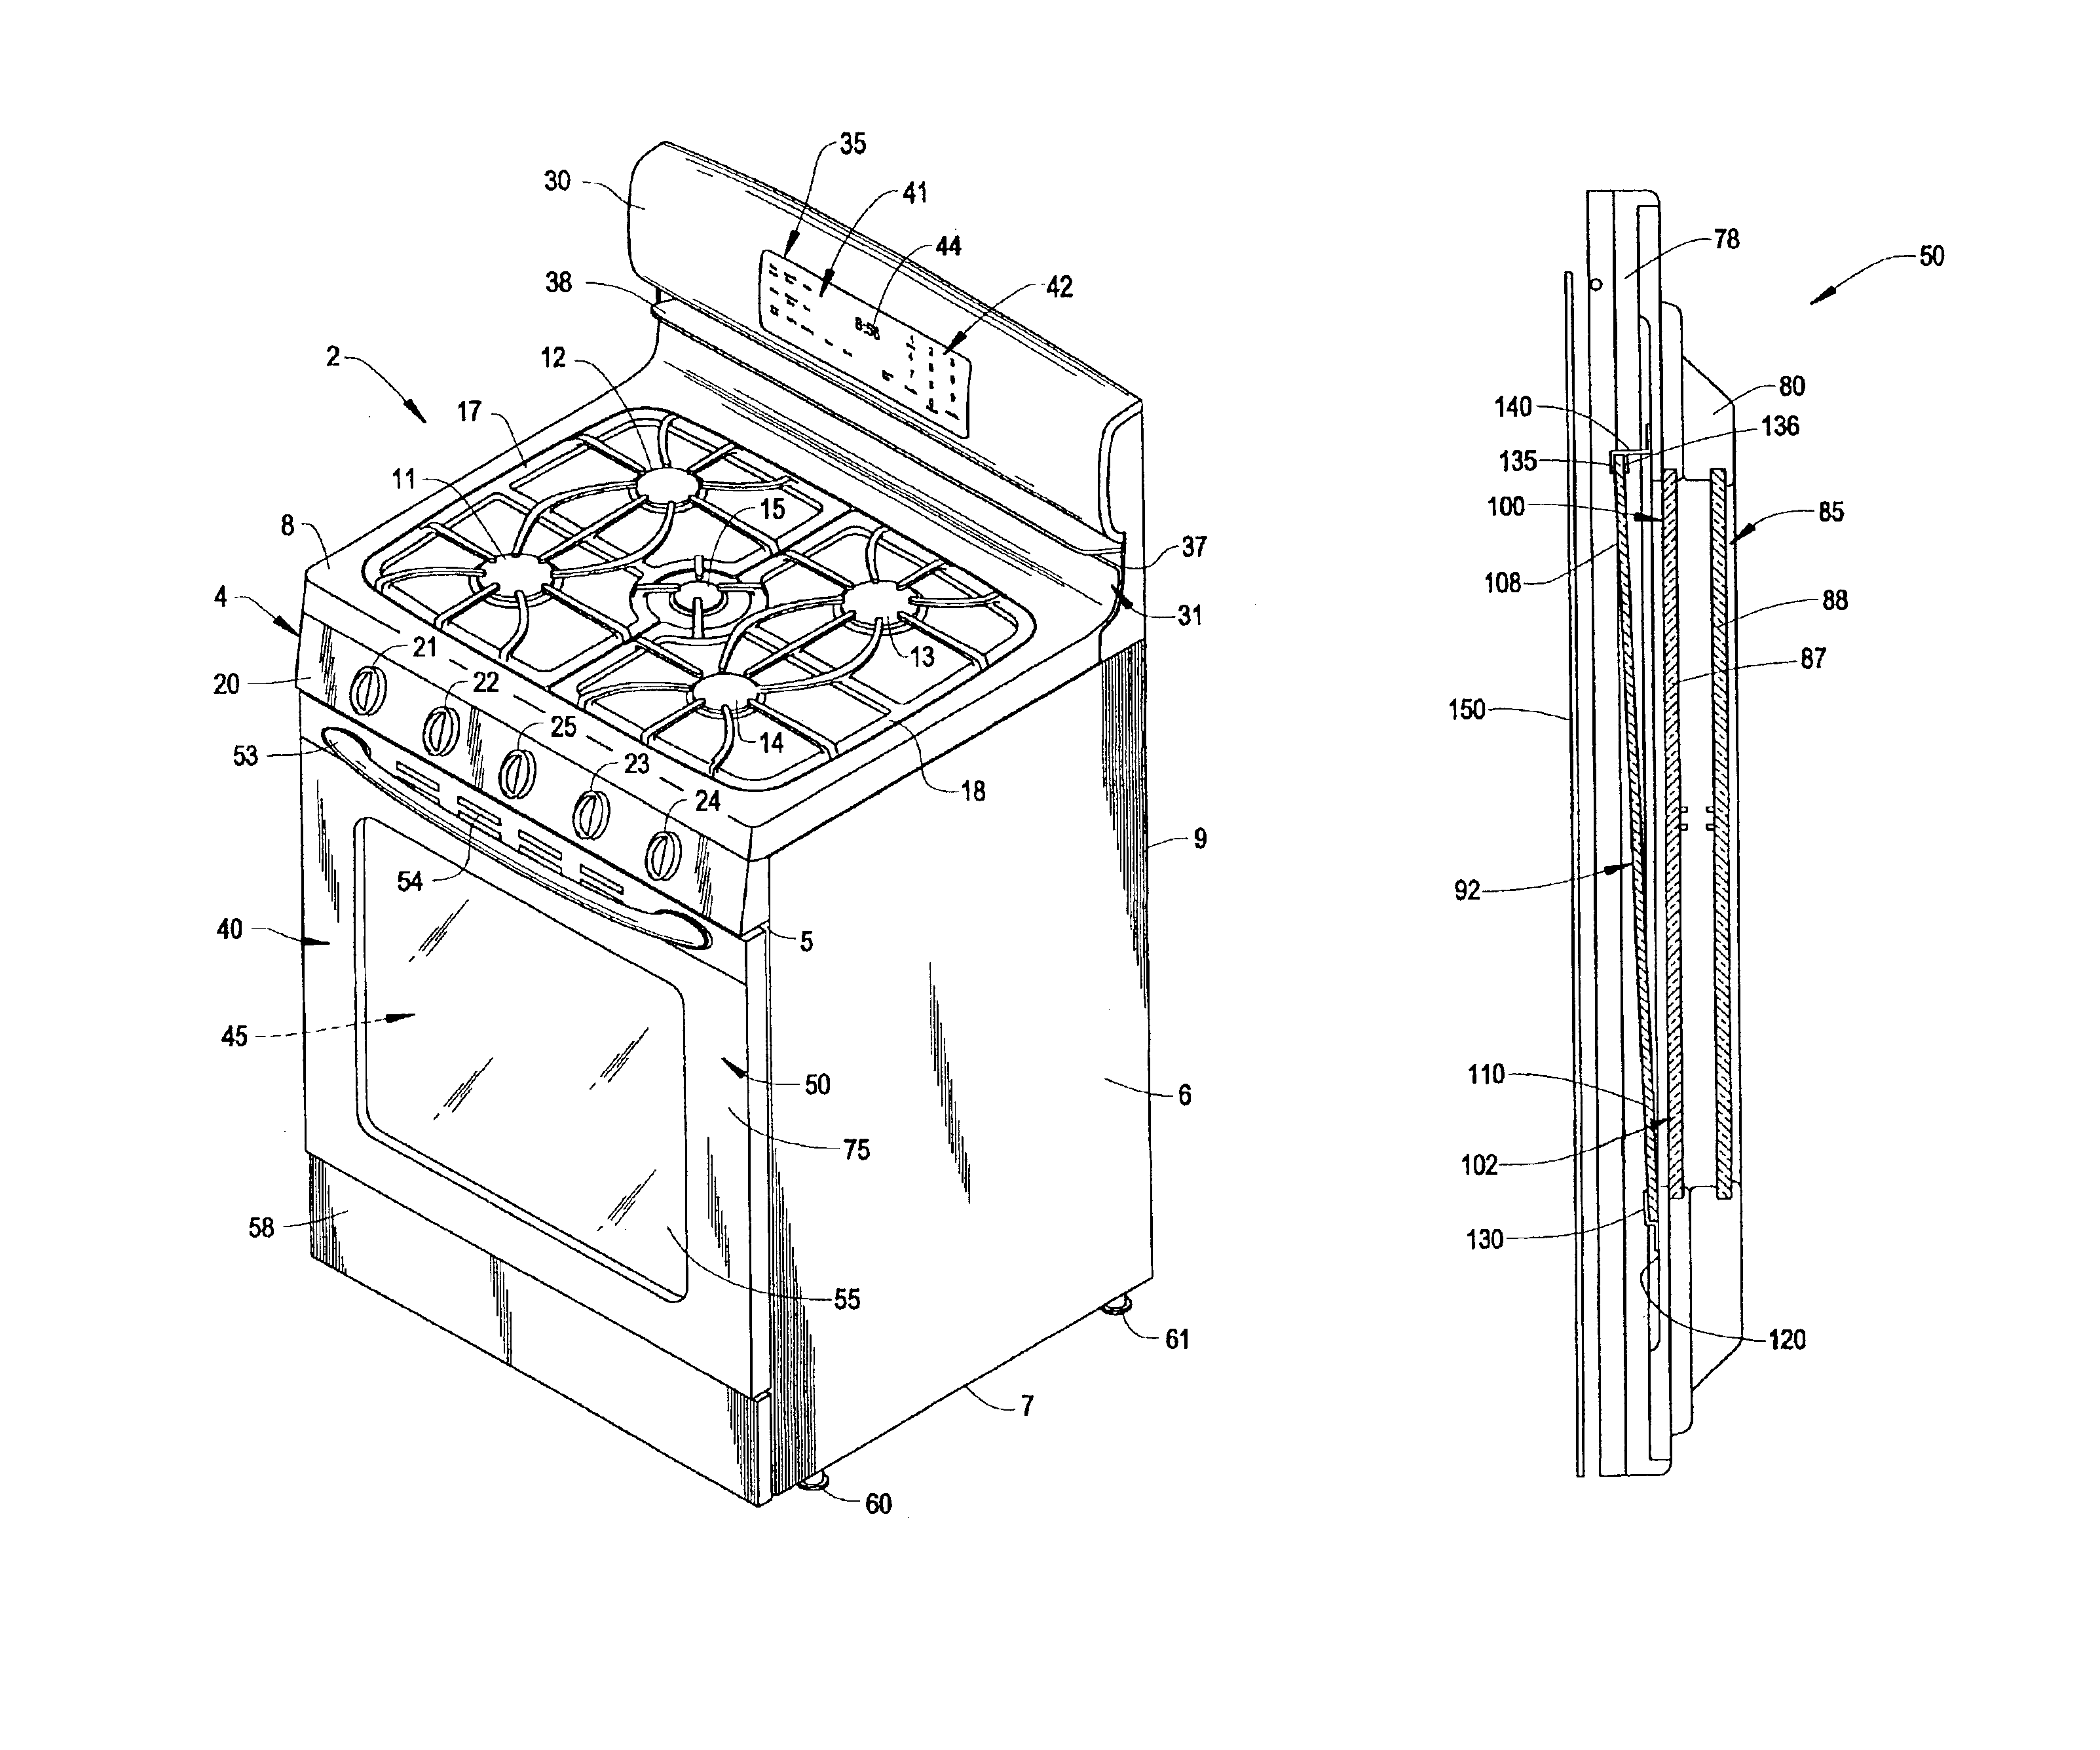 Oven door assembly